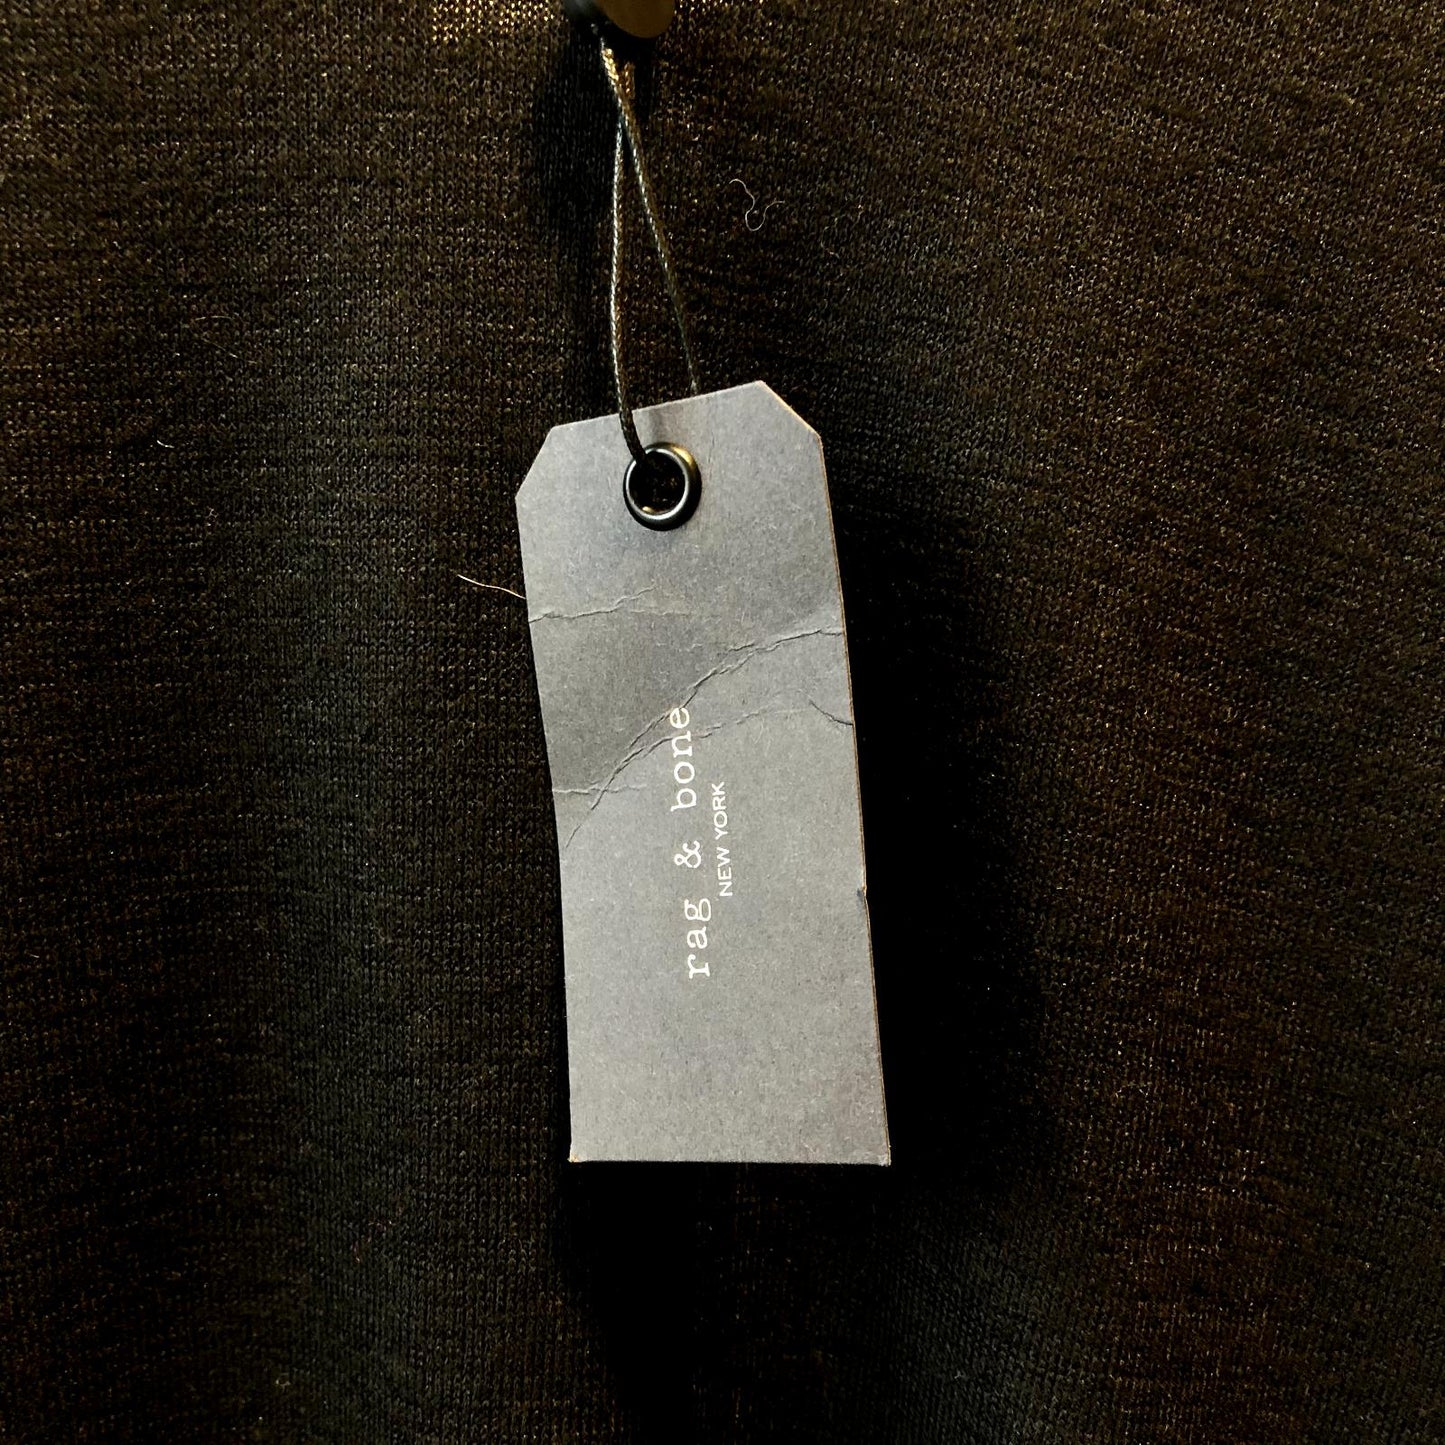 XS - Rag & Bone $155 Black The Knit Long Sleeve Pullover Shirt Top NEW 0131LD